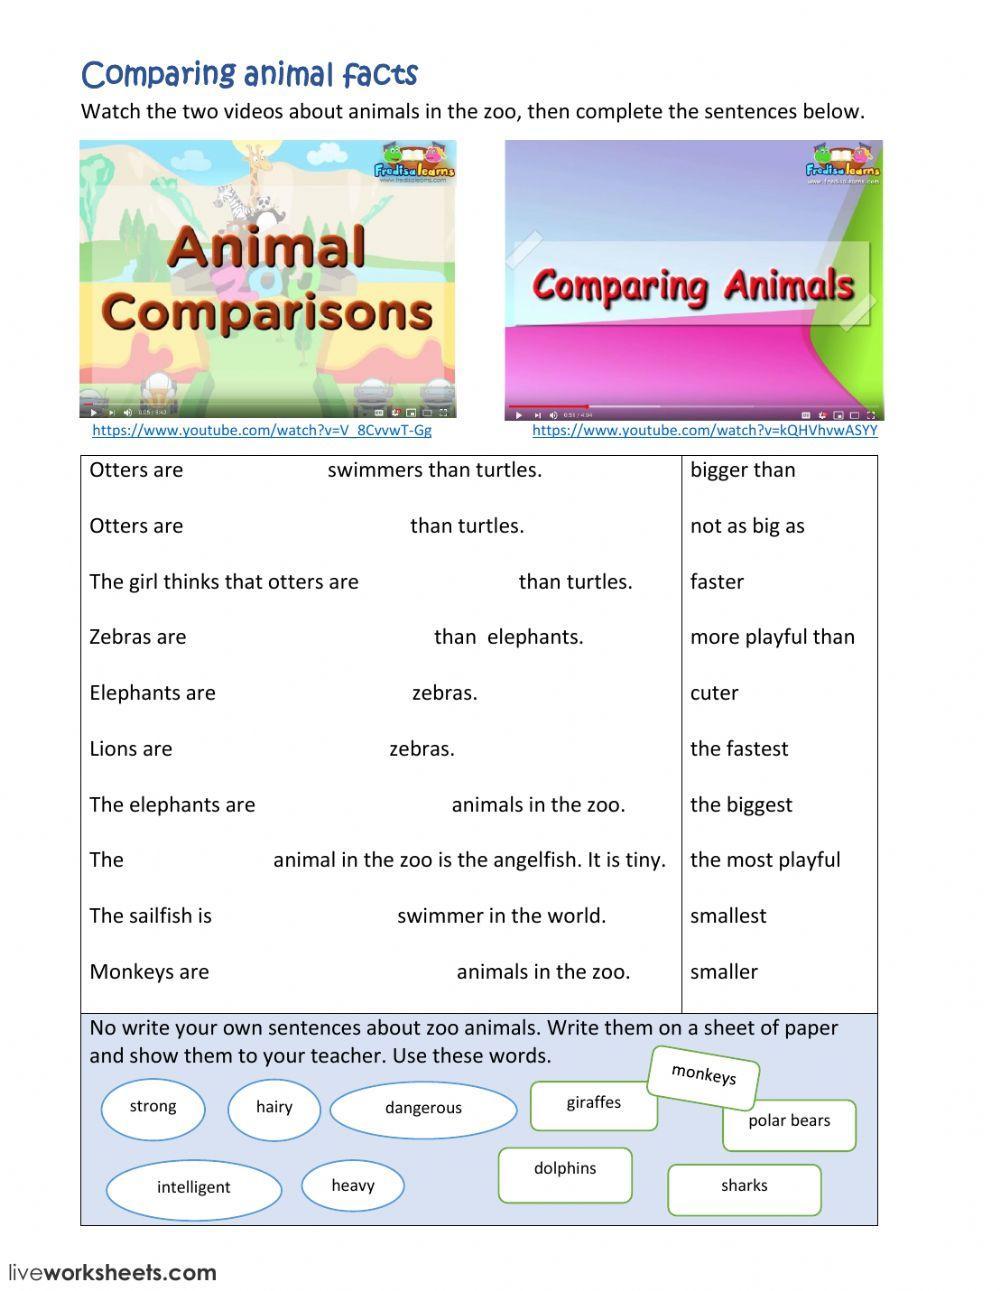 Animal comparisons